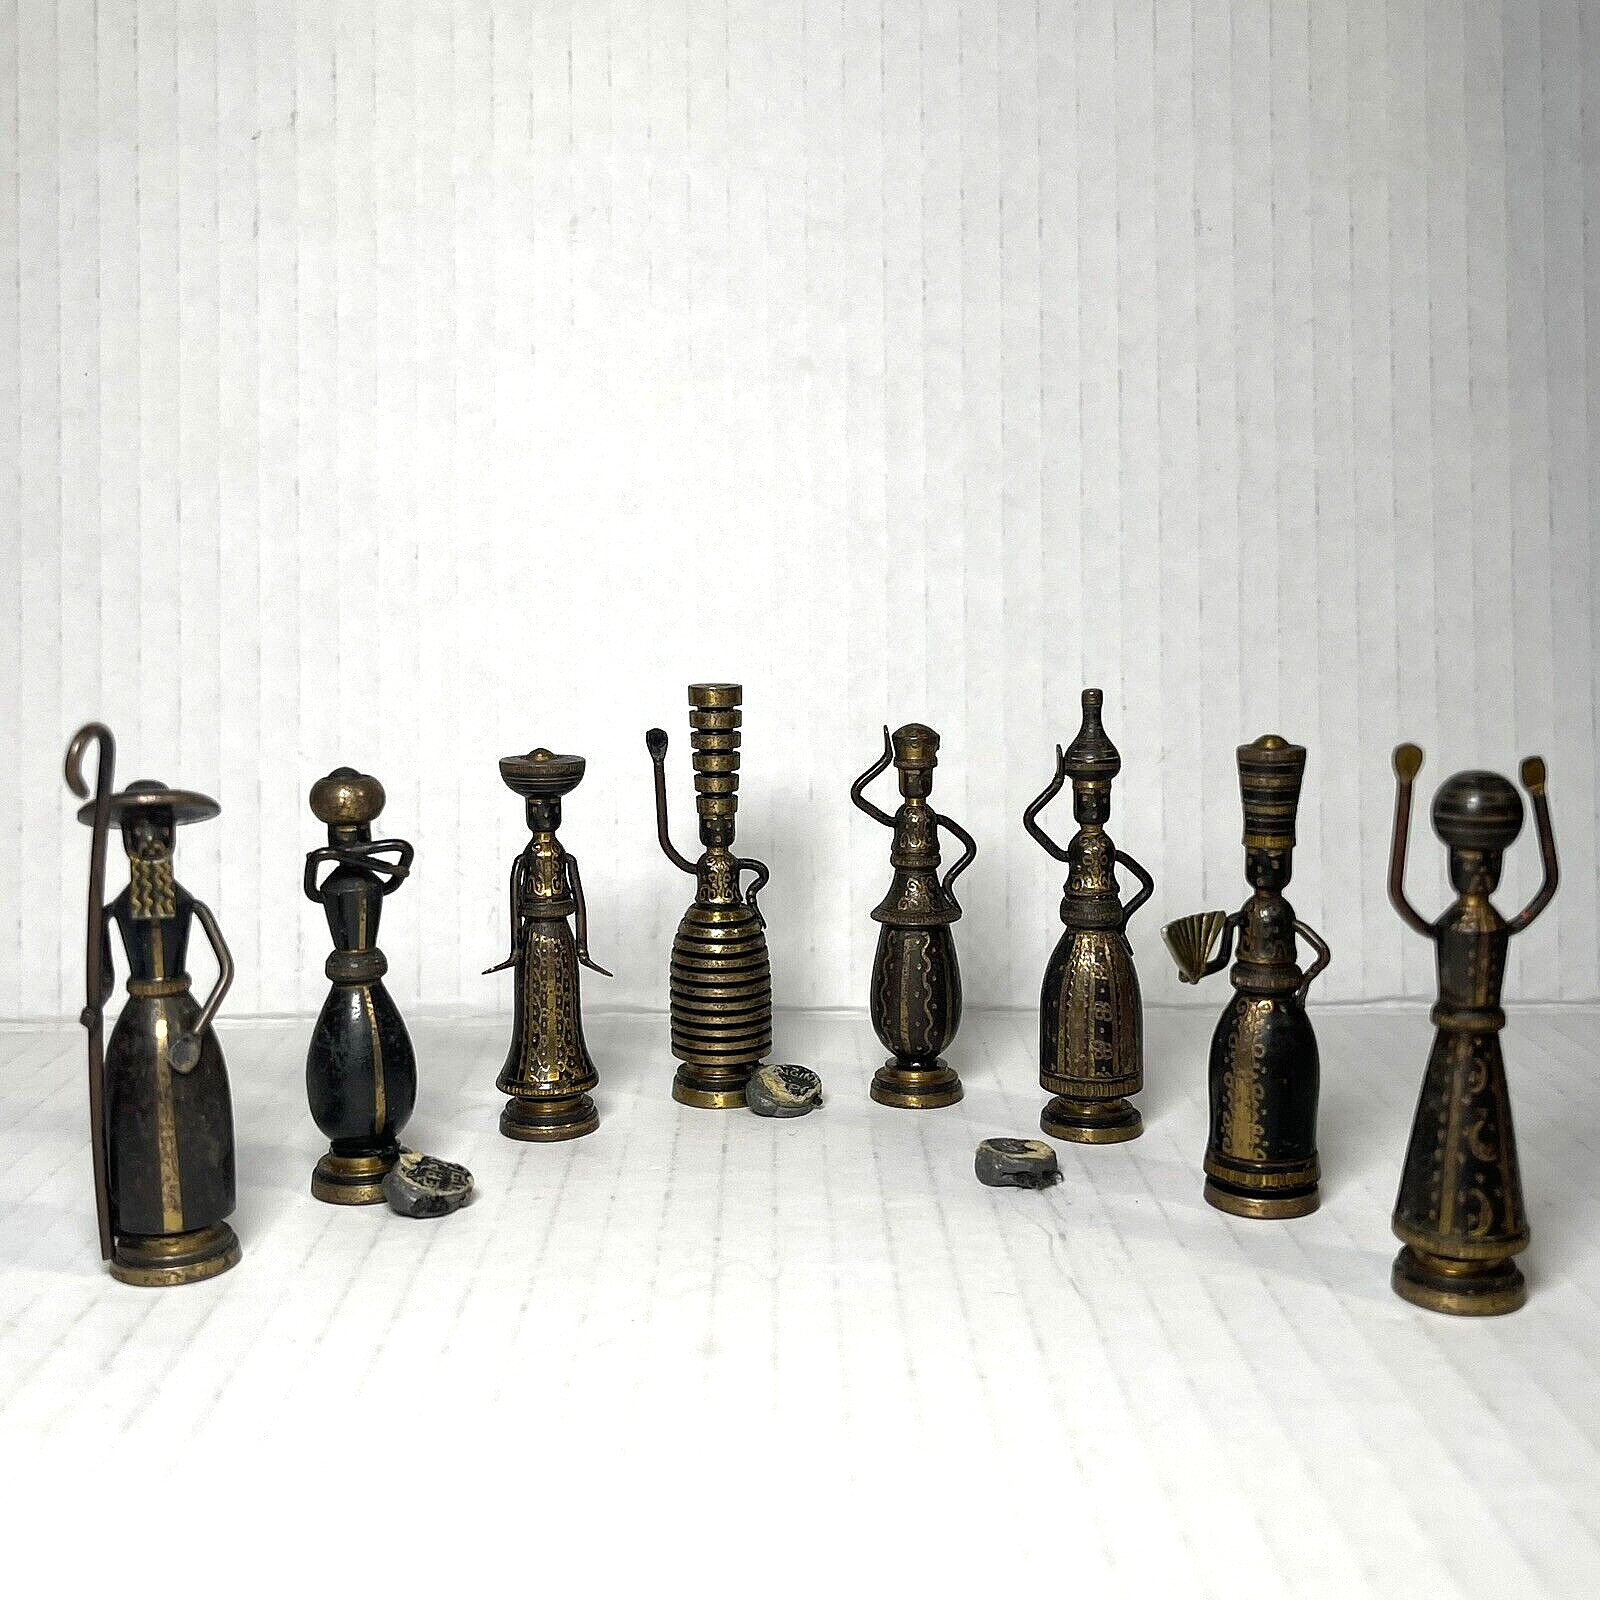 Lot of 8 Hans Teppich Brass miniature Biblical Jewish Figurines - (pre-owned)